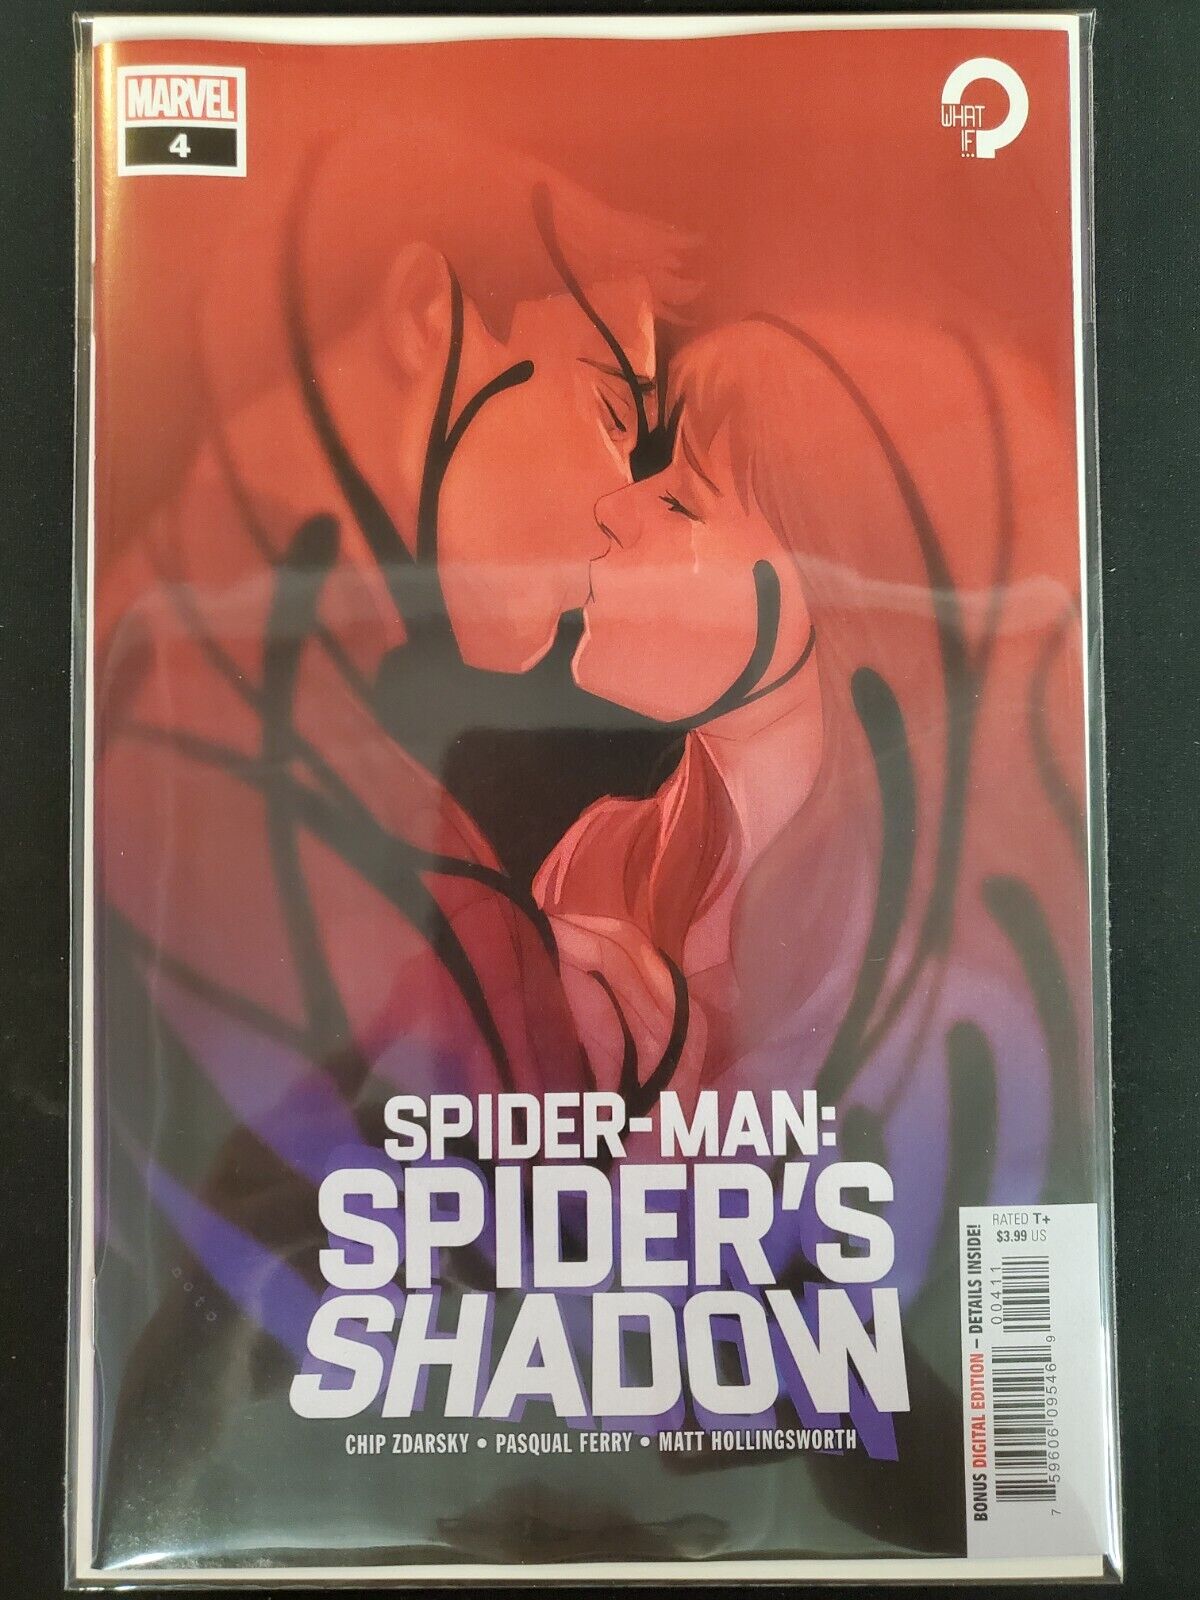 Spider-Man: Spider's Shadow #4 Marvel VF/NM Comics Book